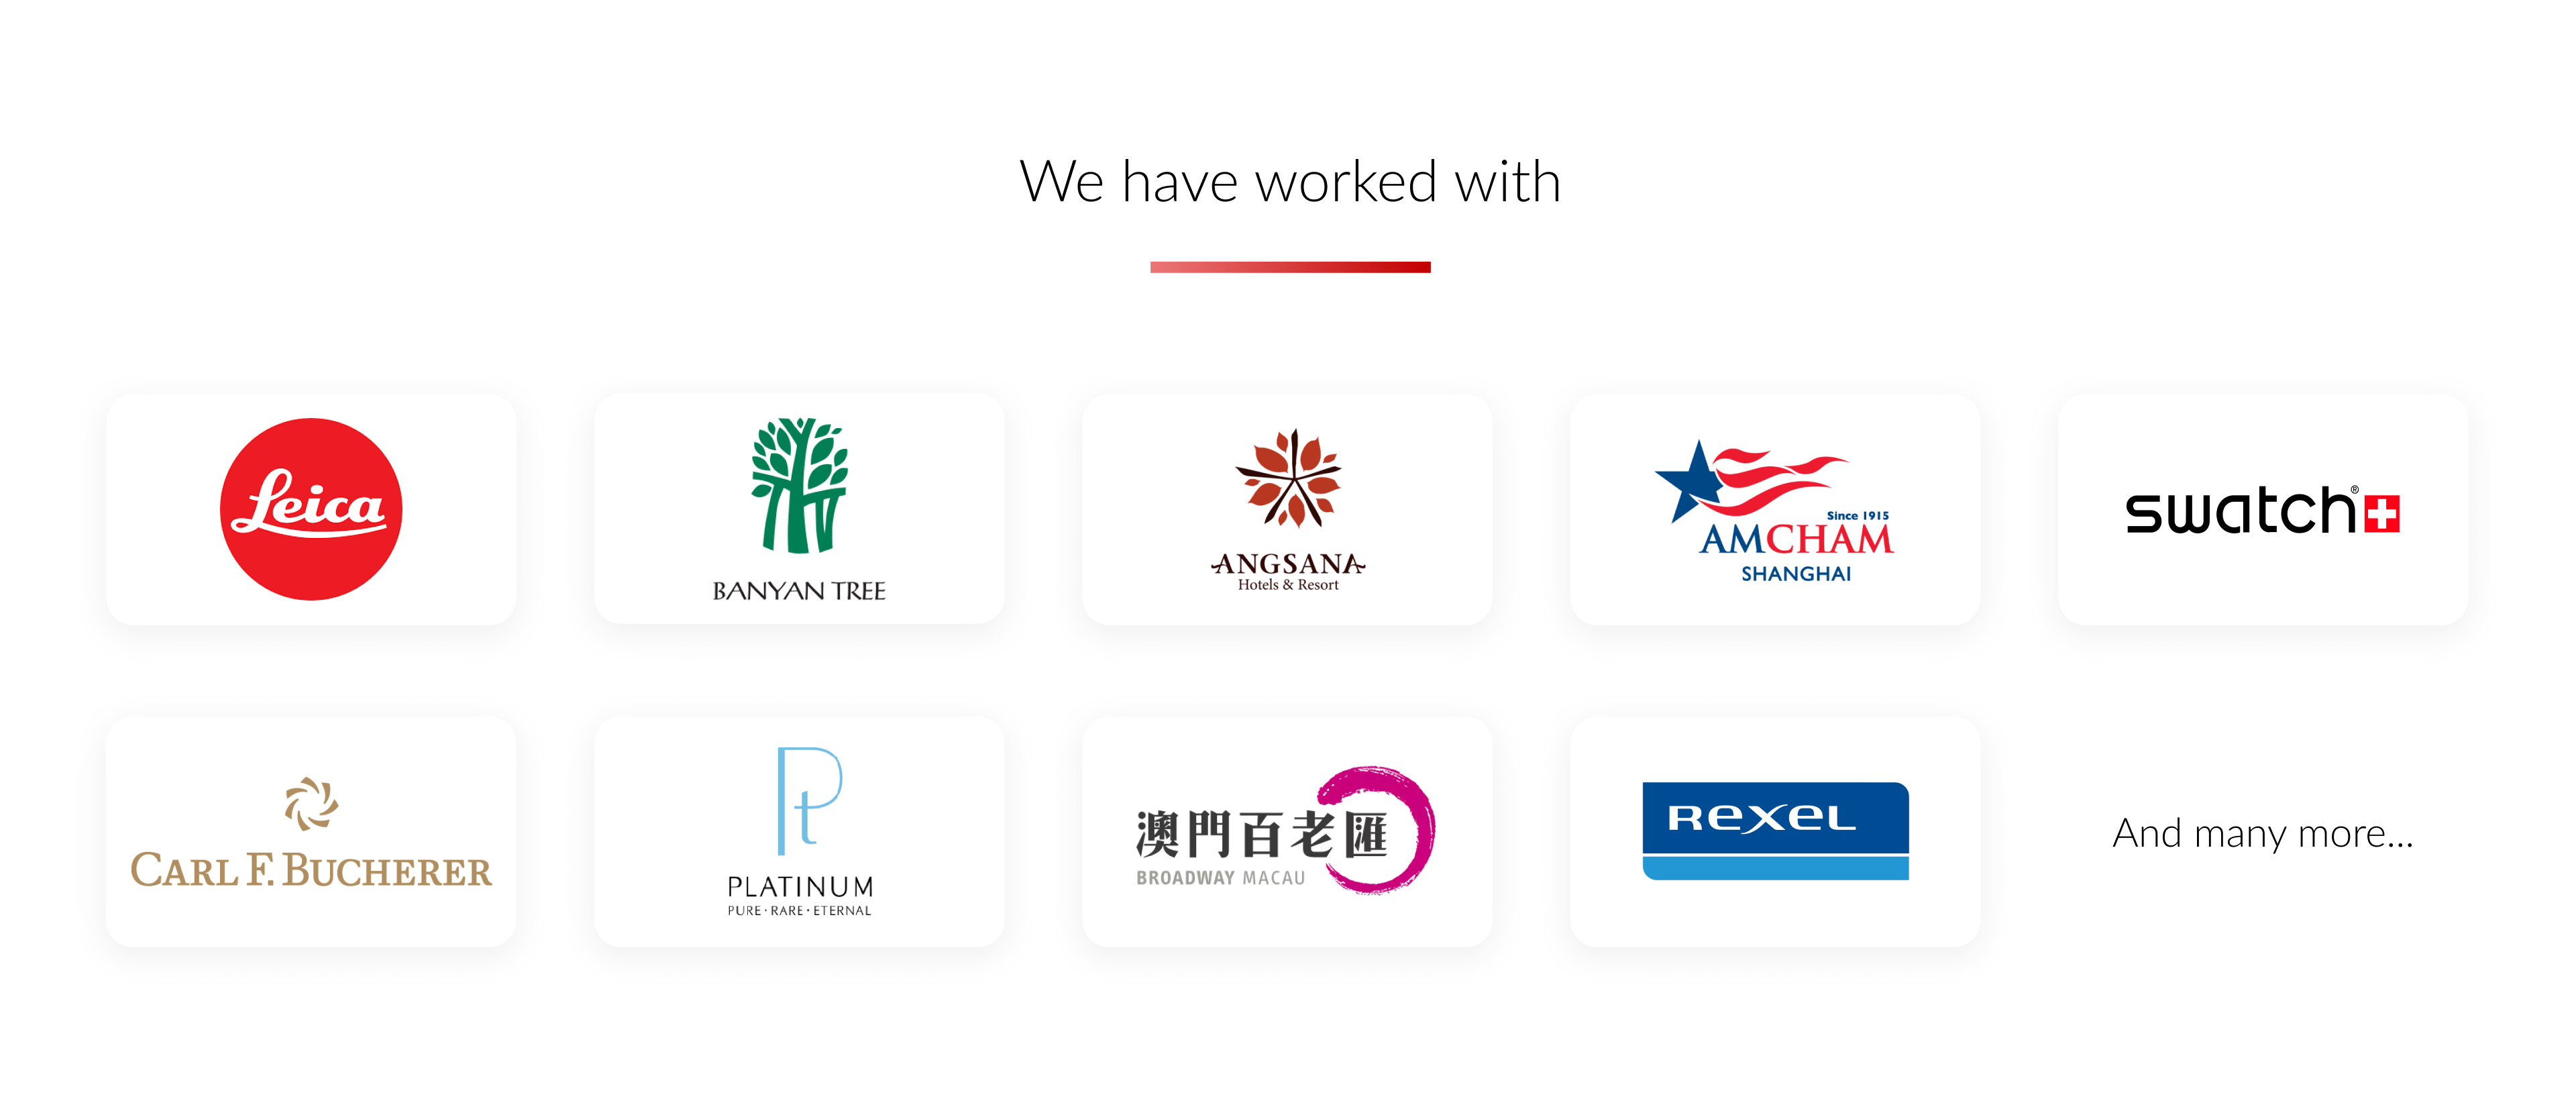 ITC has provided on Drupal web development services for Leica, Banyan Tree, Angsana, AmCham Shanghai, Swatch, Carl F. Bucherer, Platinum, Broadway Macau, Rexel, and many more.